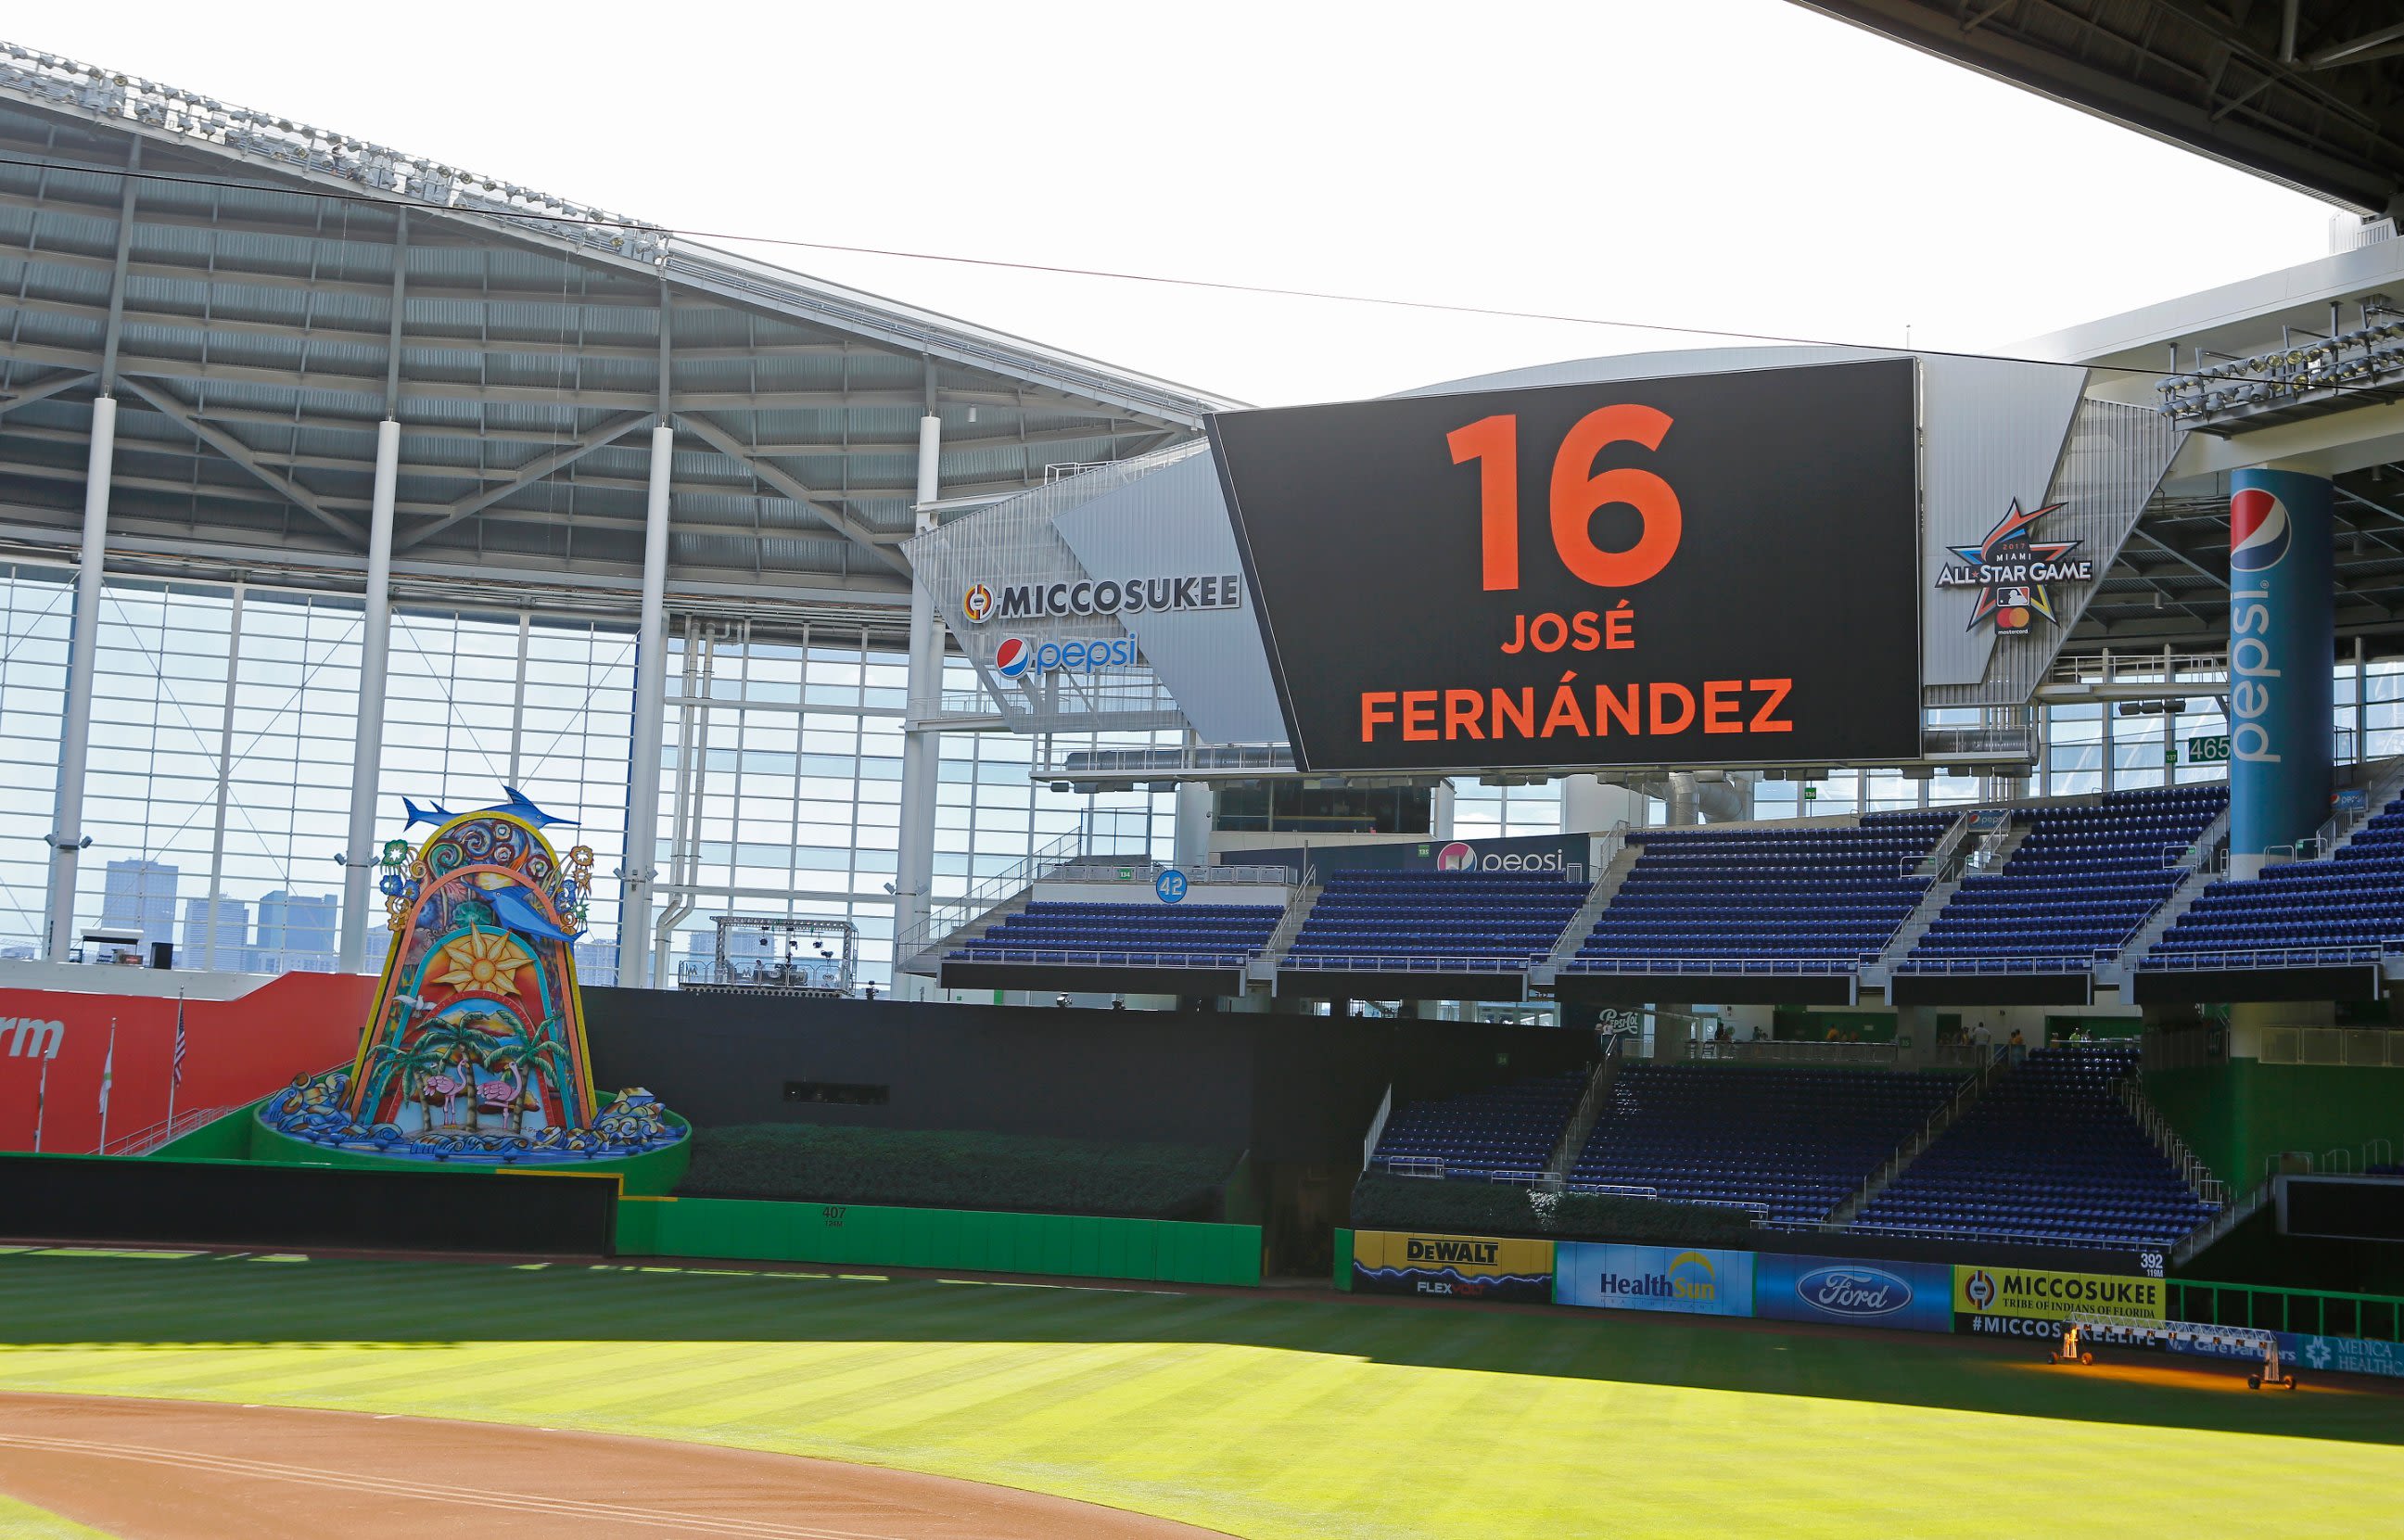 Death of Marlins' pitcher Jose Fernandez devastates Florida Cuban